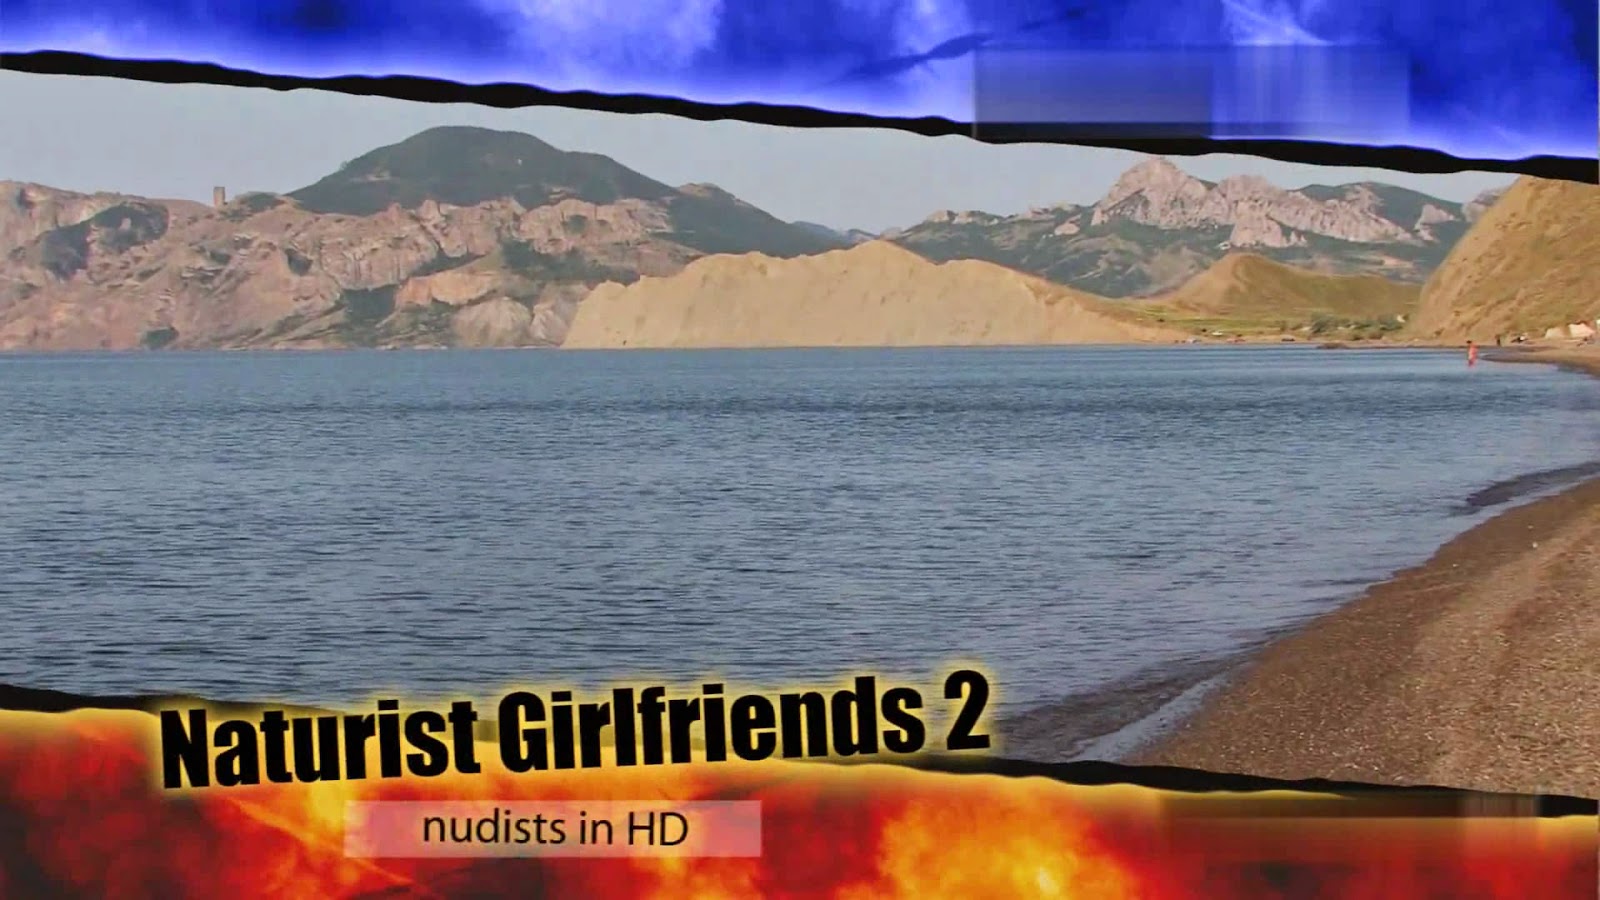 Naturist Girlfriends 2. Full version. 